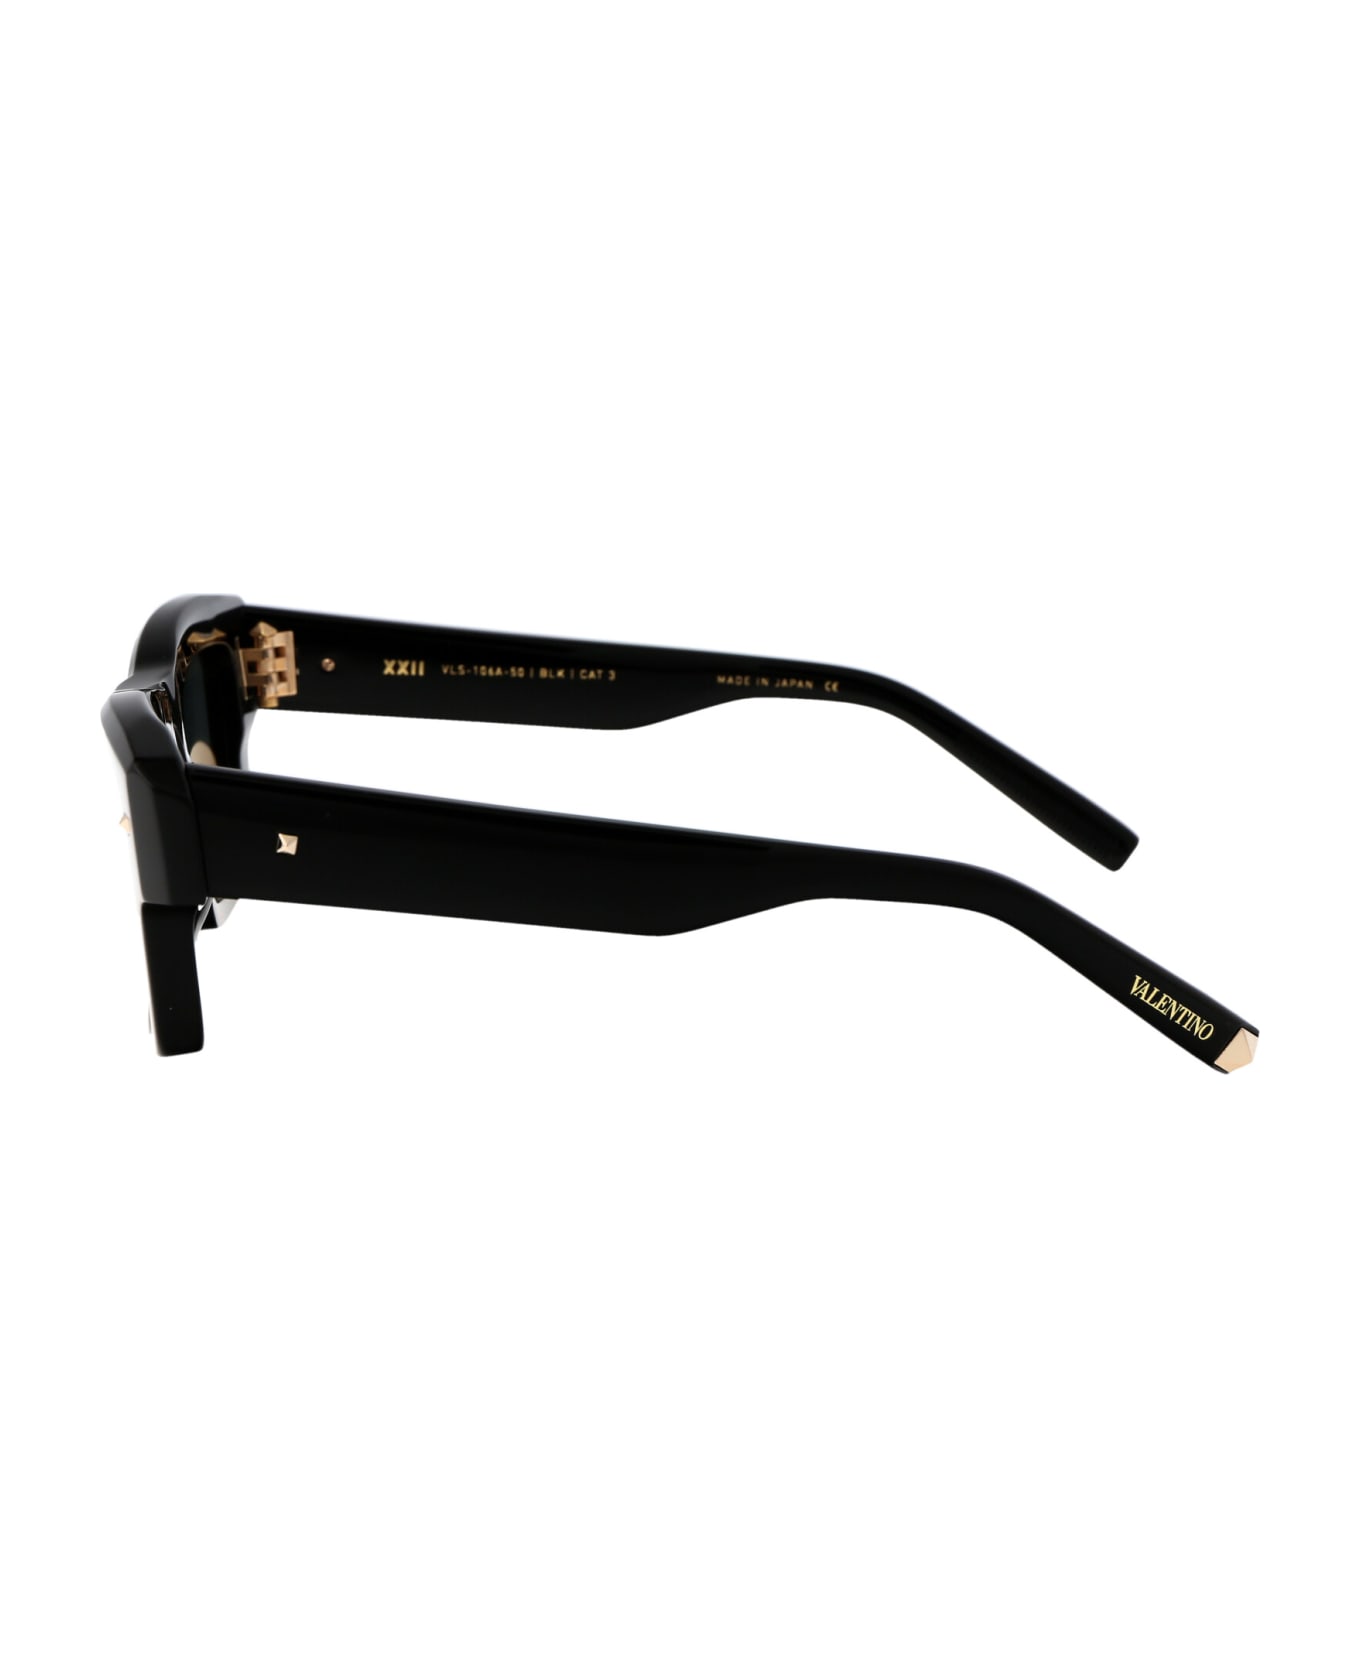 Valentino Eyewear Xxii Sunglasses - Black - White Gold w/Dark Green Lenses サングラス